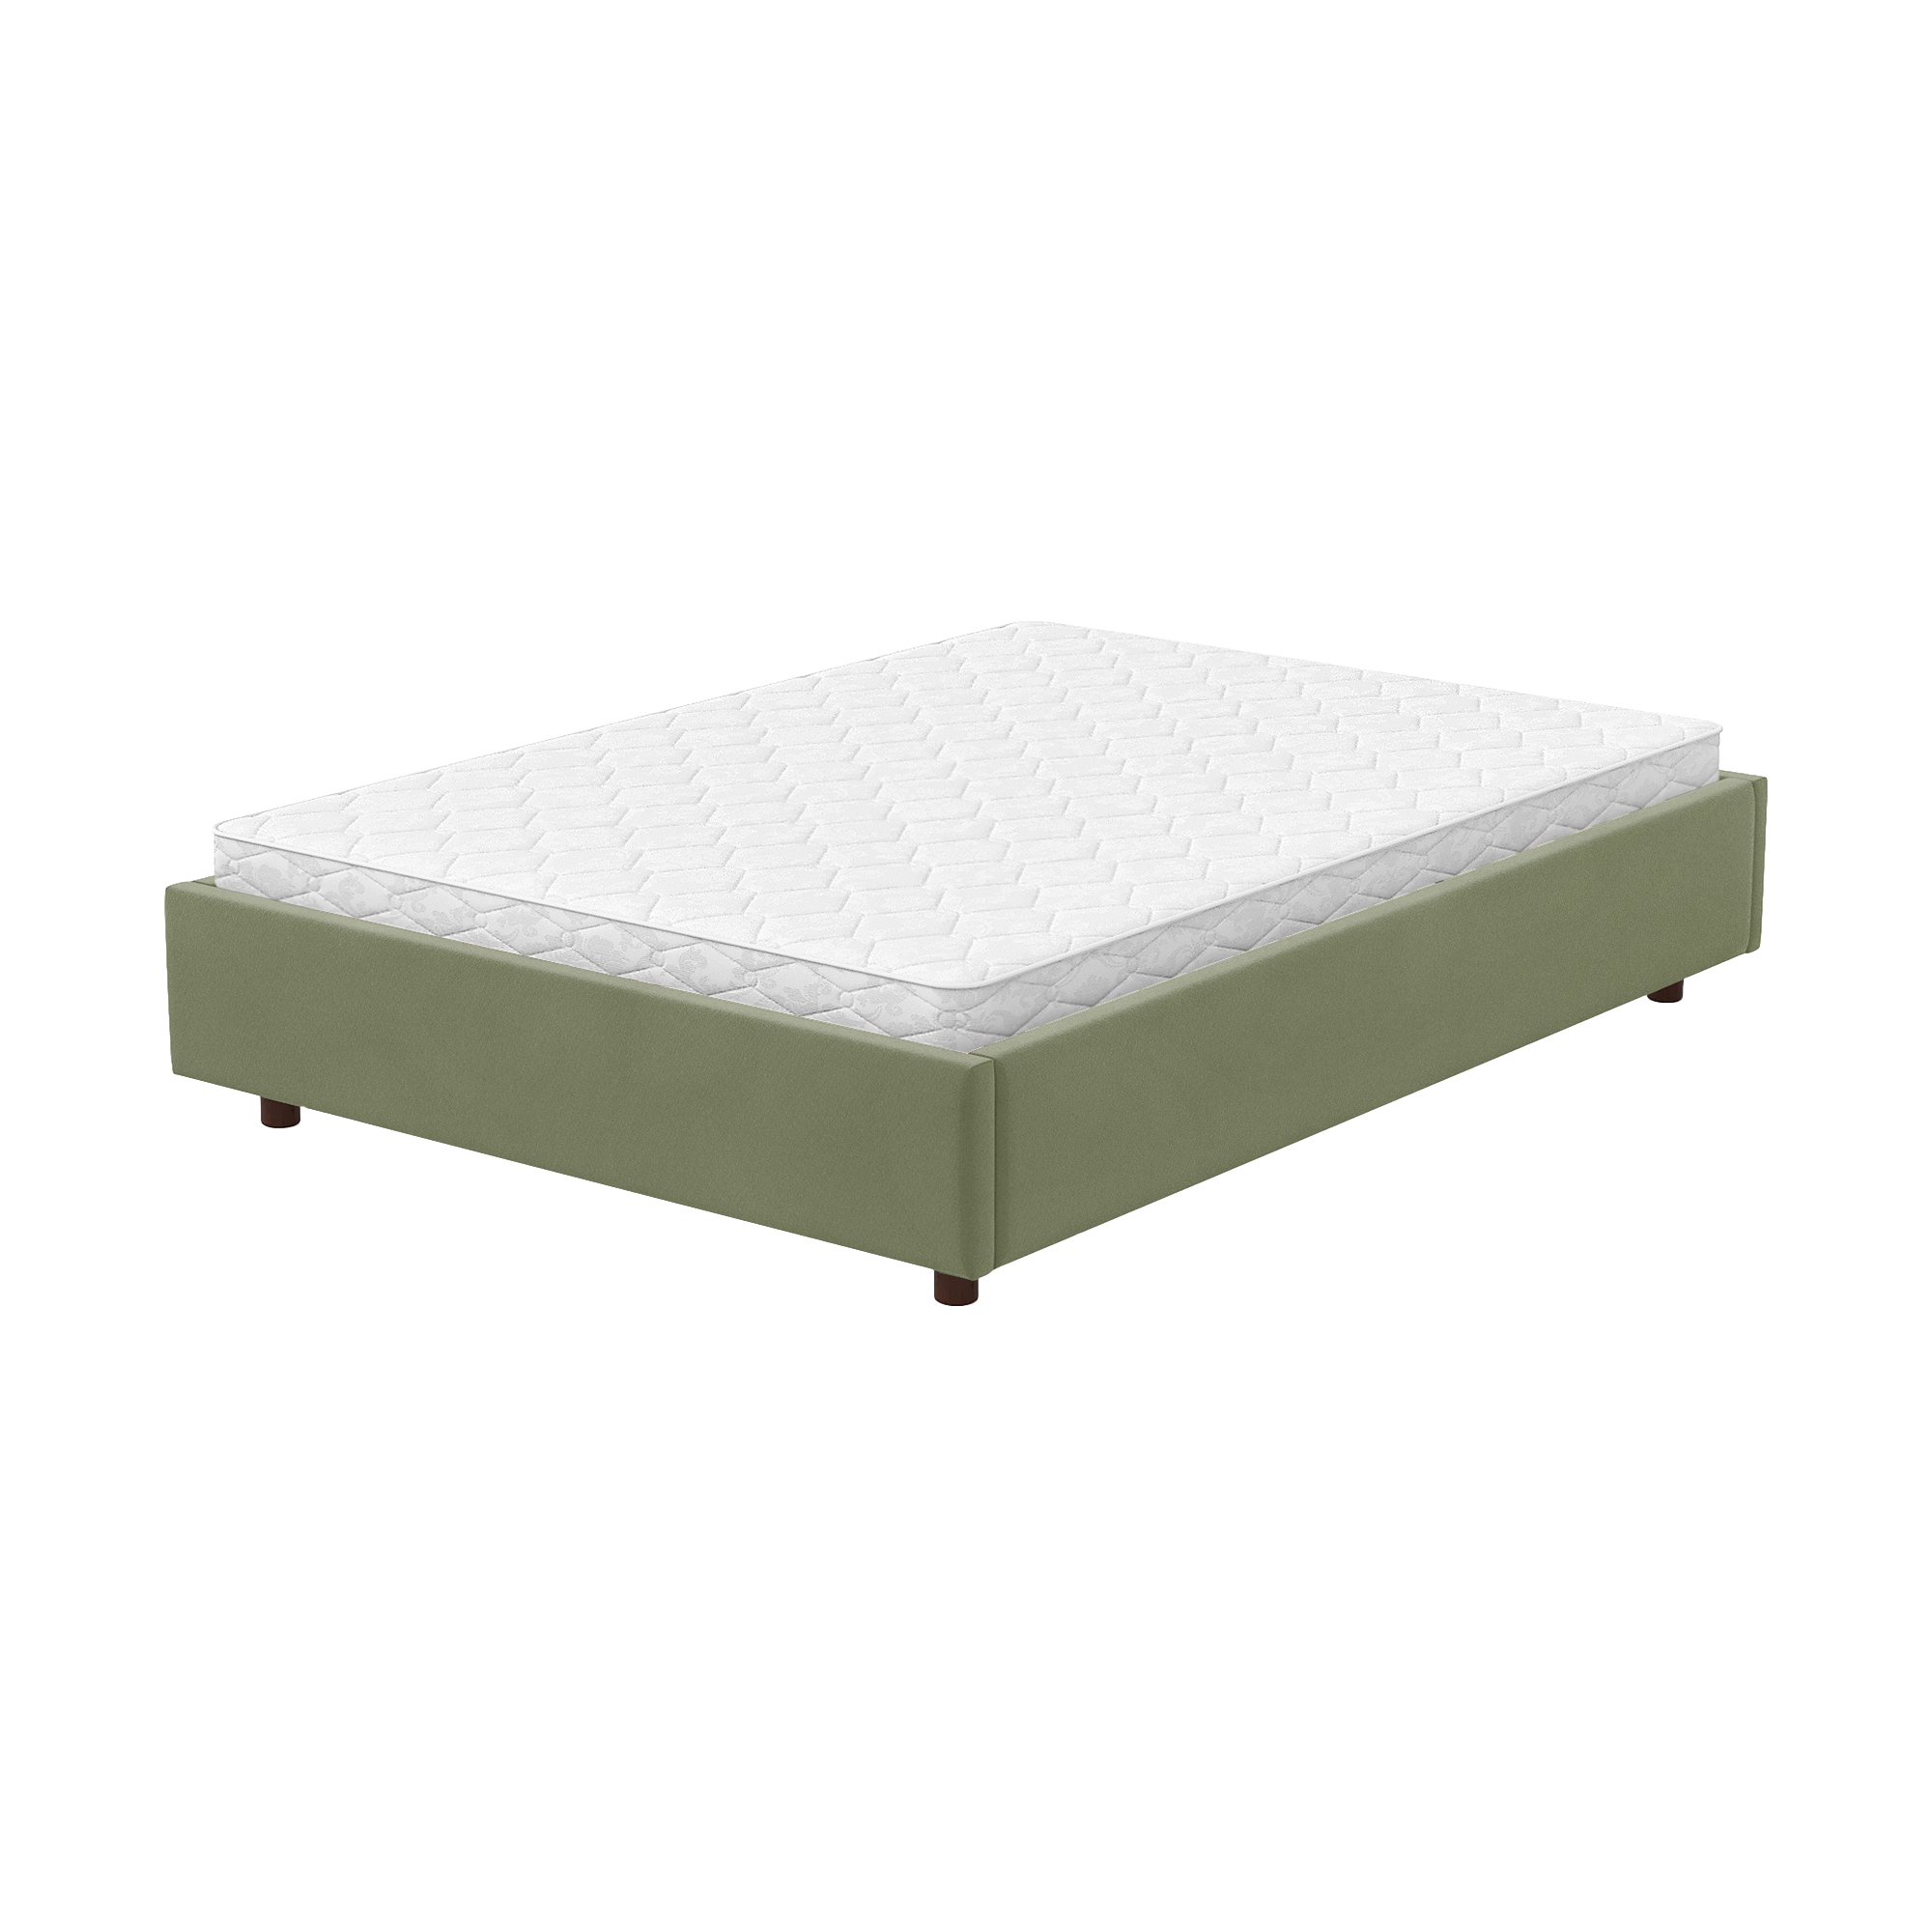 Кровать AS Саманта 160x200 орех/грасс, цвет зеленый, размер 200х160х30 - фото 2